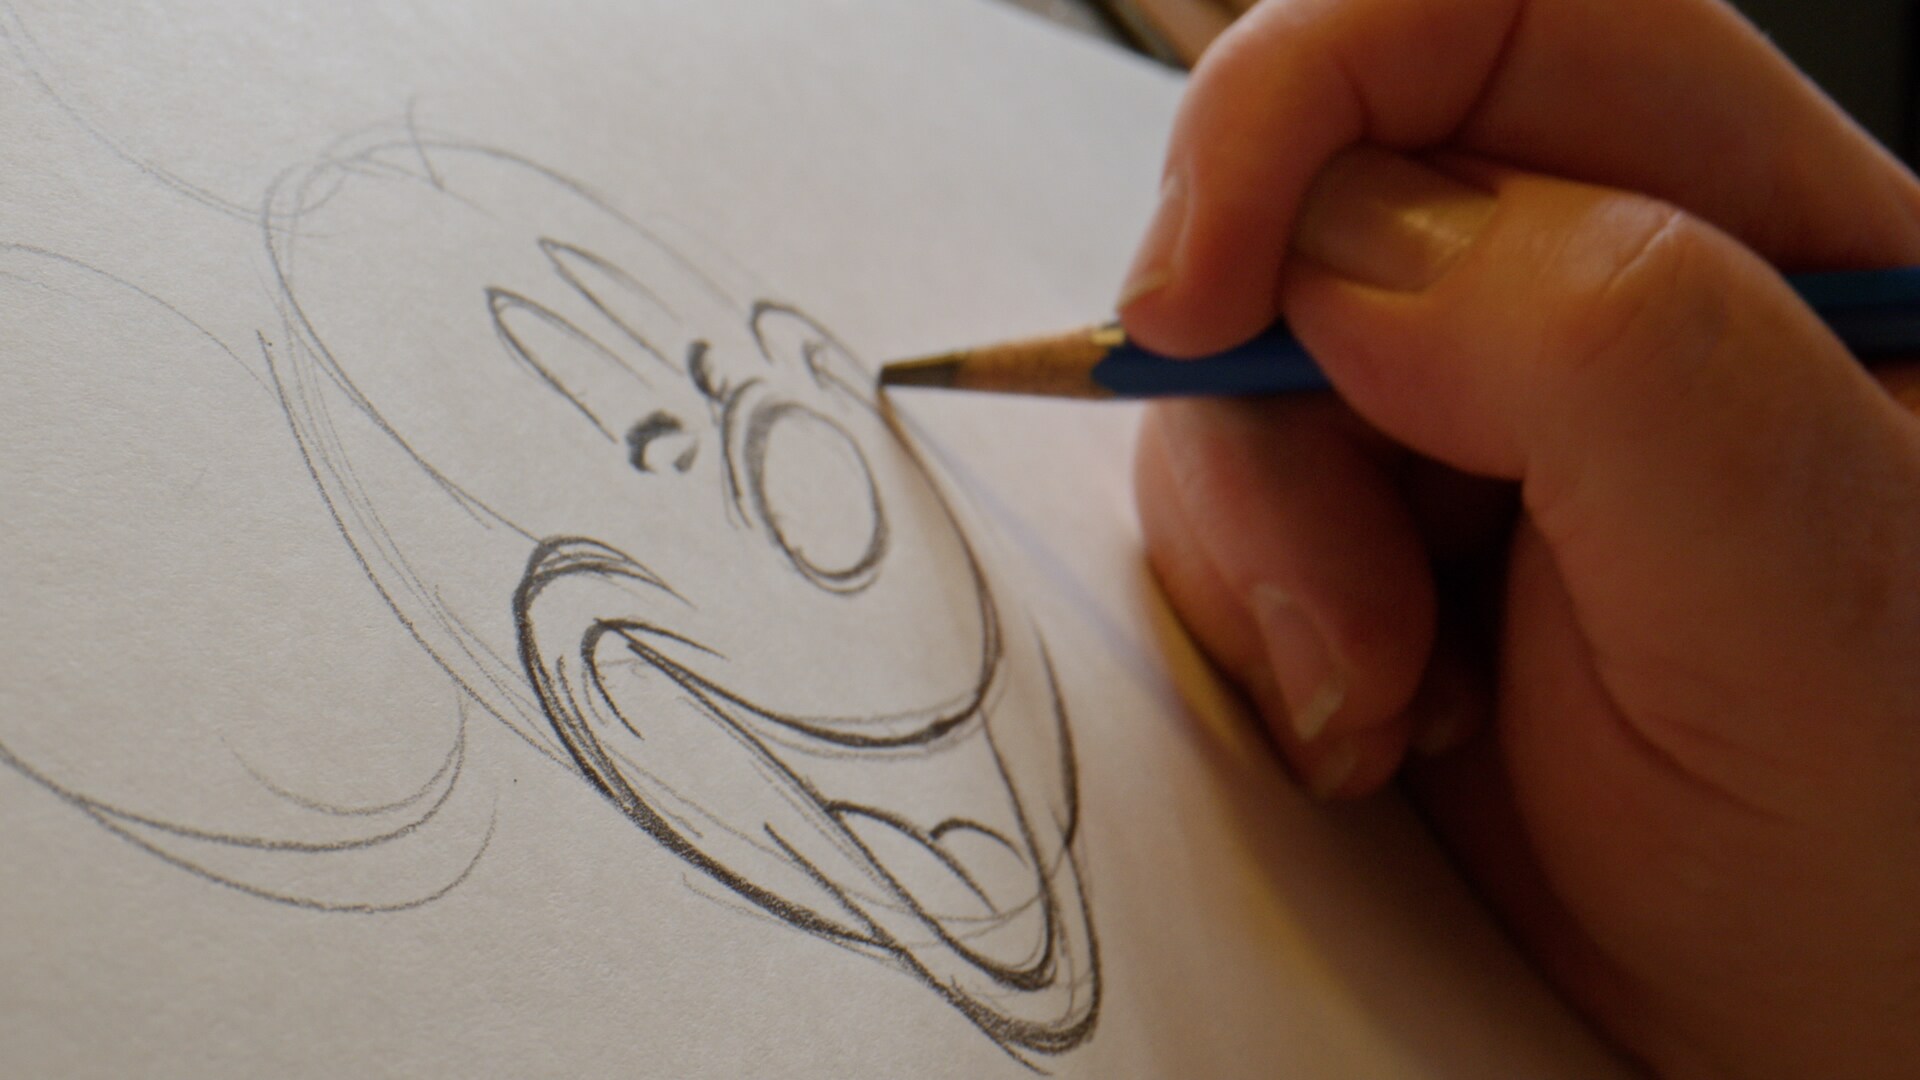 Disney animator, Eric Goldberg, draws an original Mickey. (Credit: Mortimer Productions)